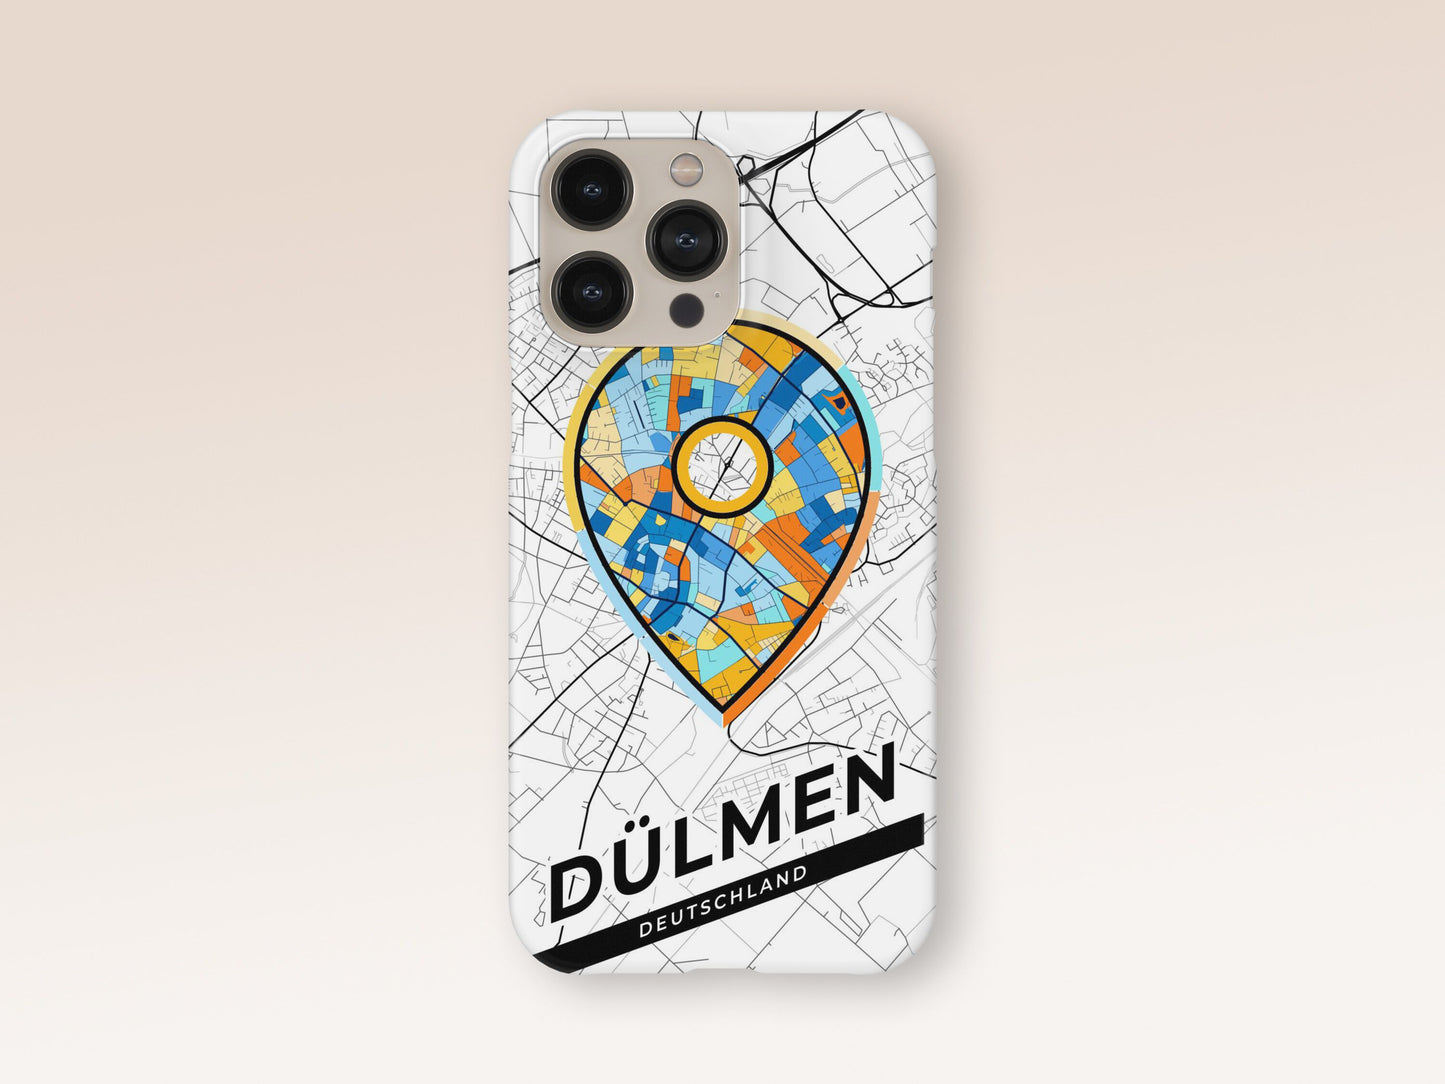 Dülmen Deutschland slim phone case with colorful icon. Birthday, wedding or housewarming gift. Couple match cases. 1